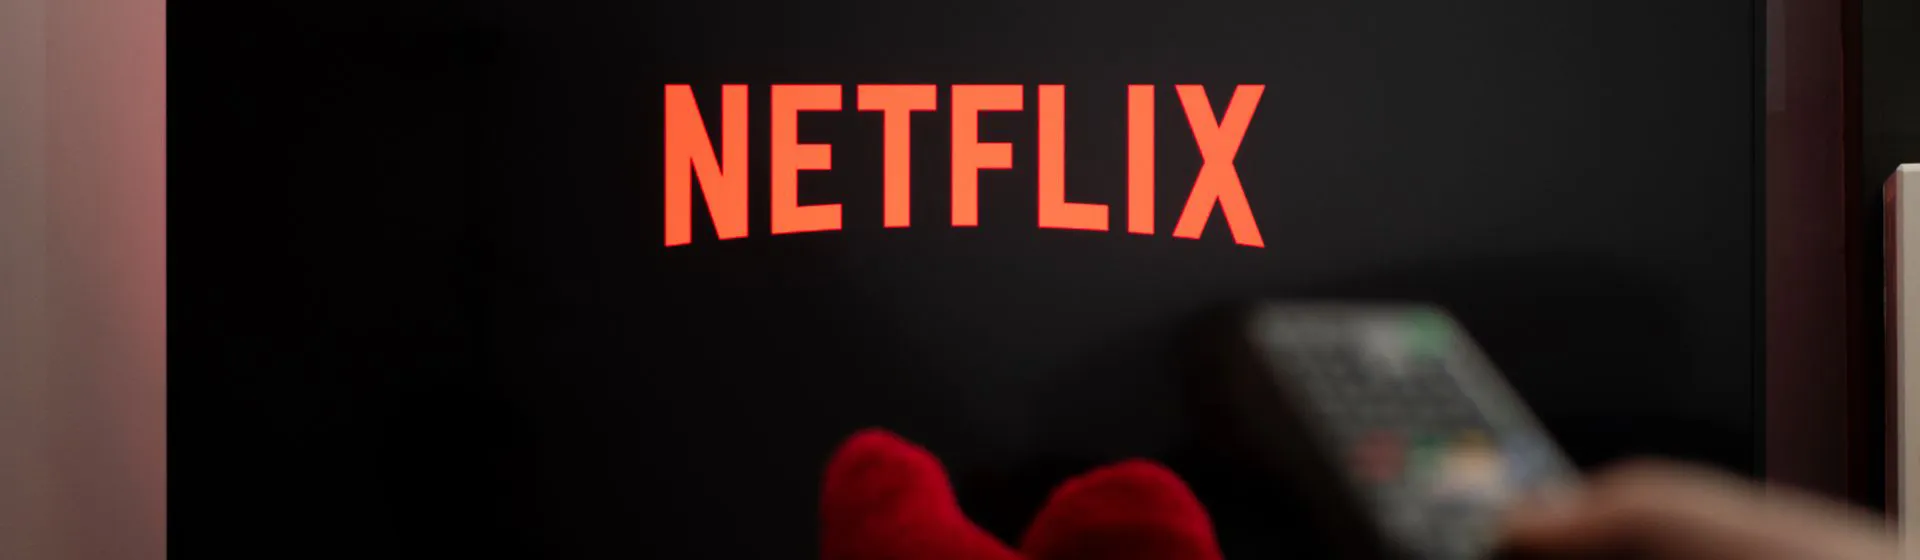 Capa do post: Como baixar Netflix para TV box? Confira o passo a passo